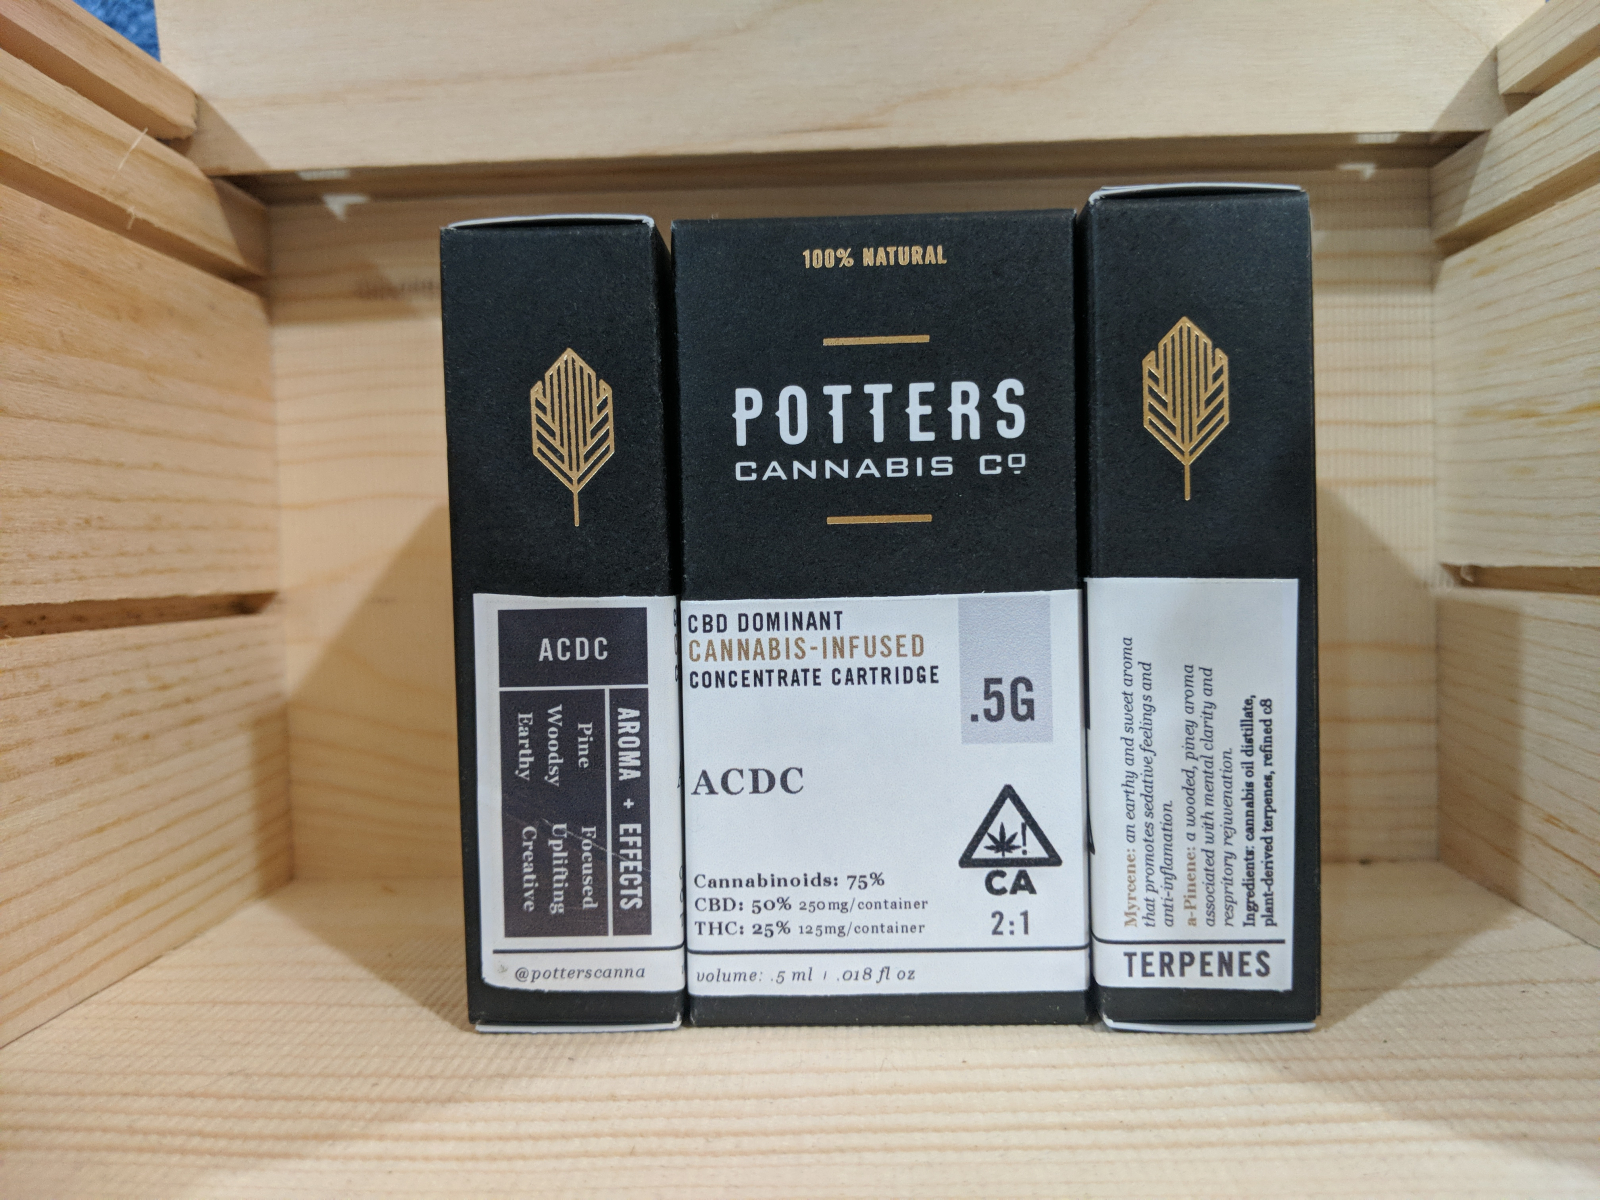 Potters half gram ACDC cartridge 2:1